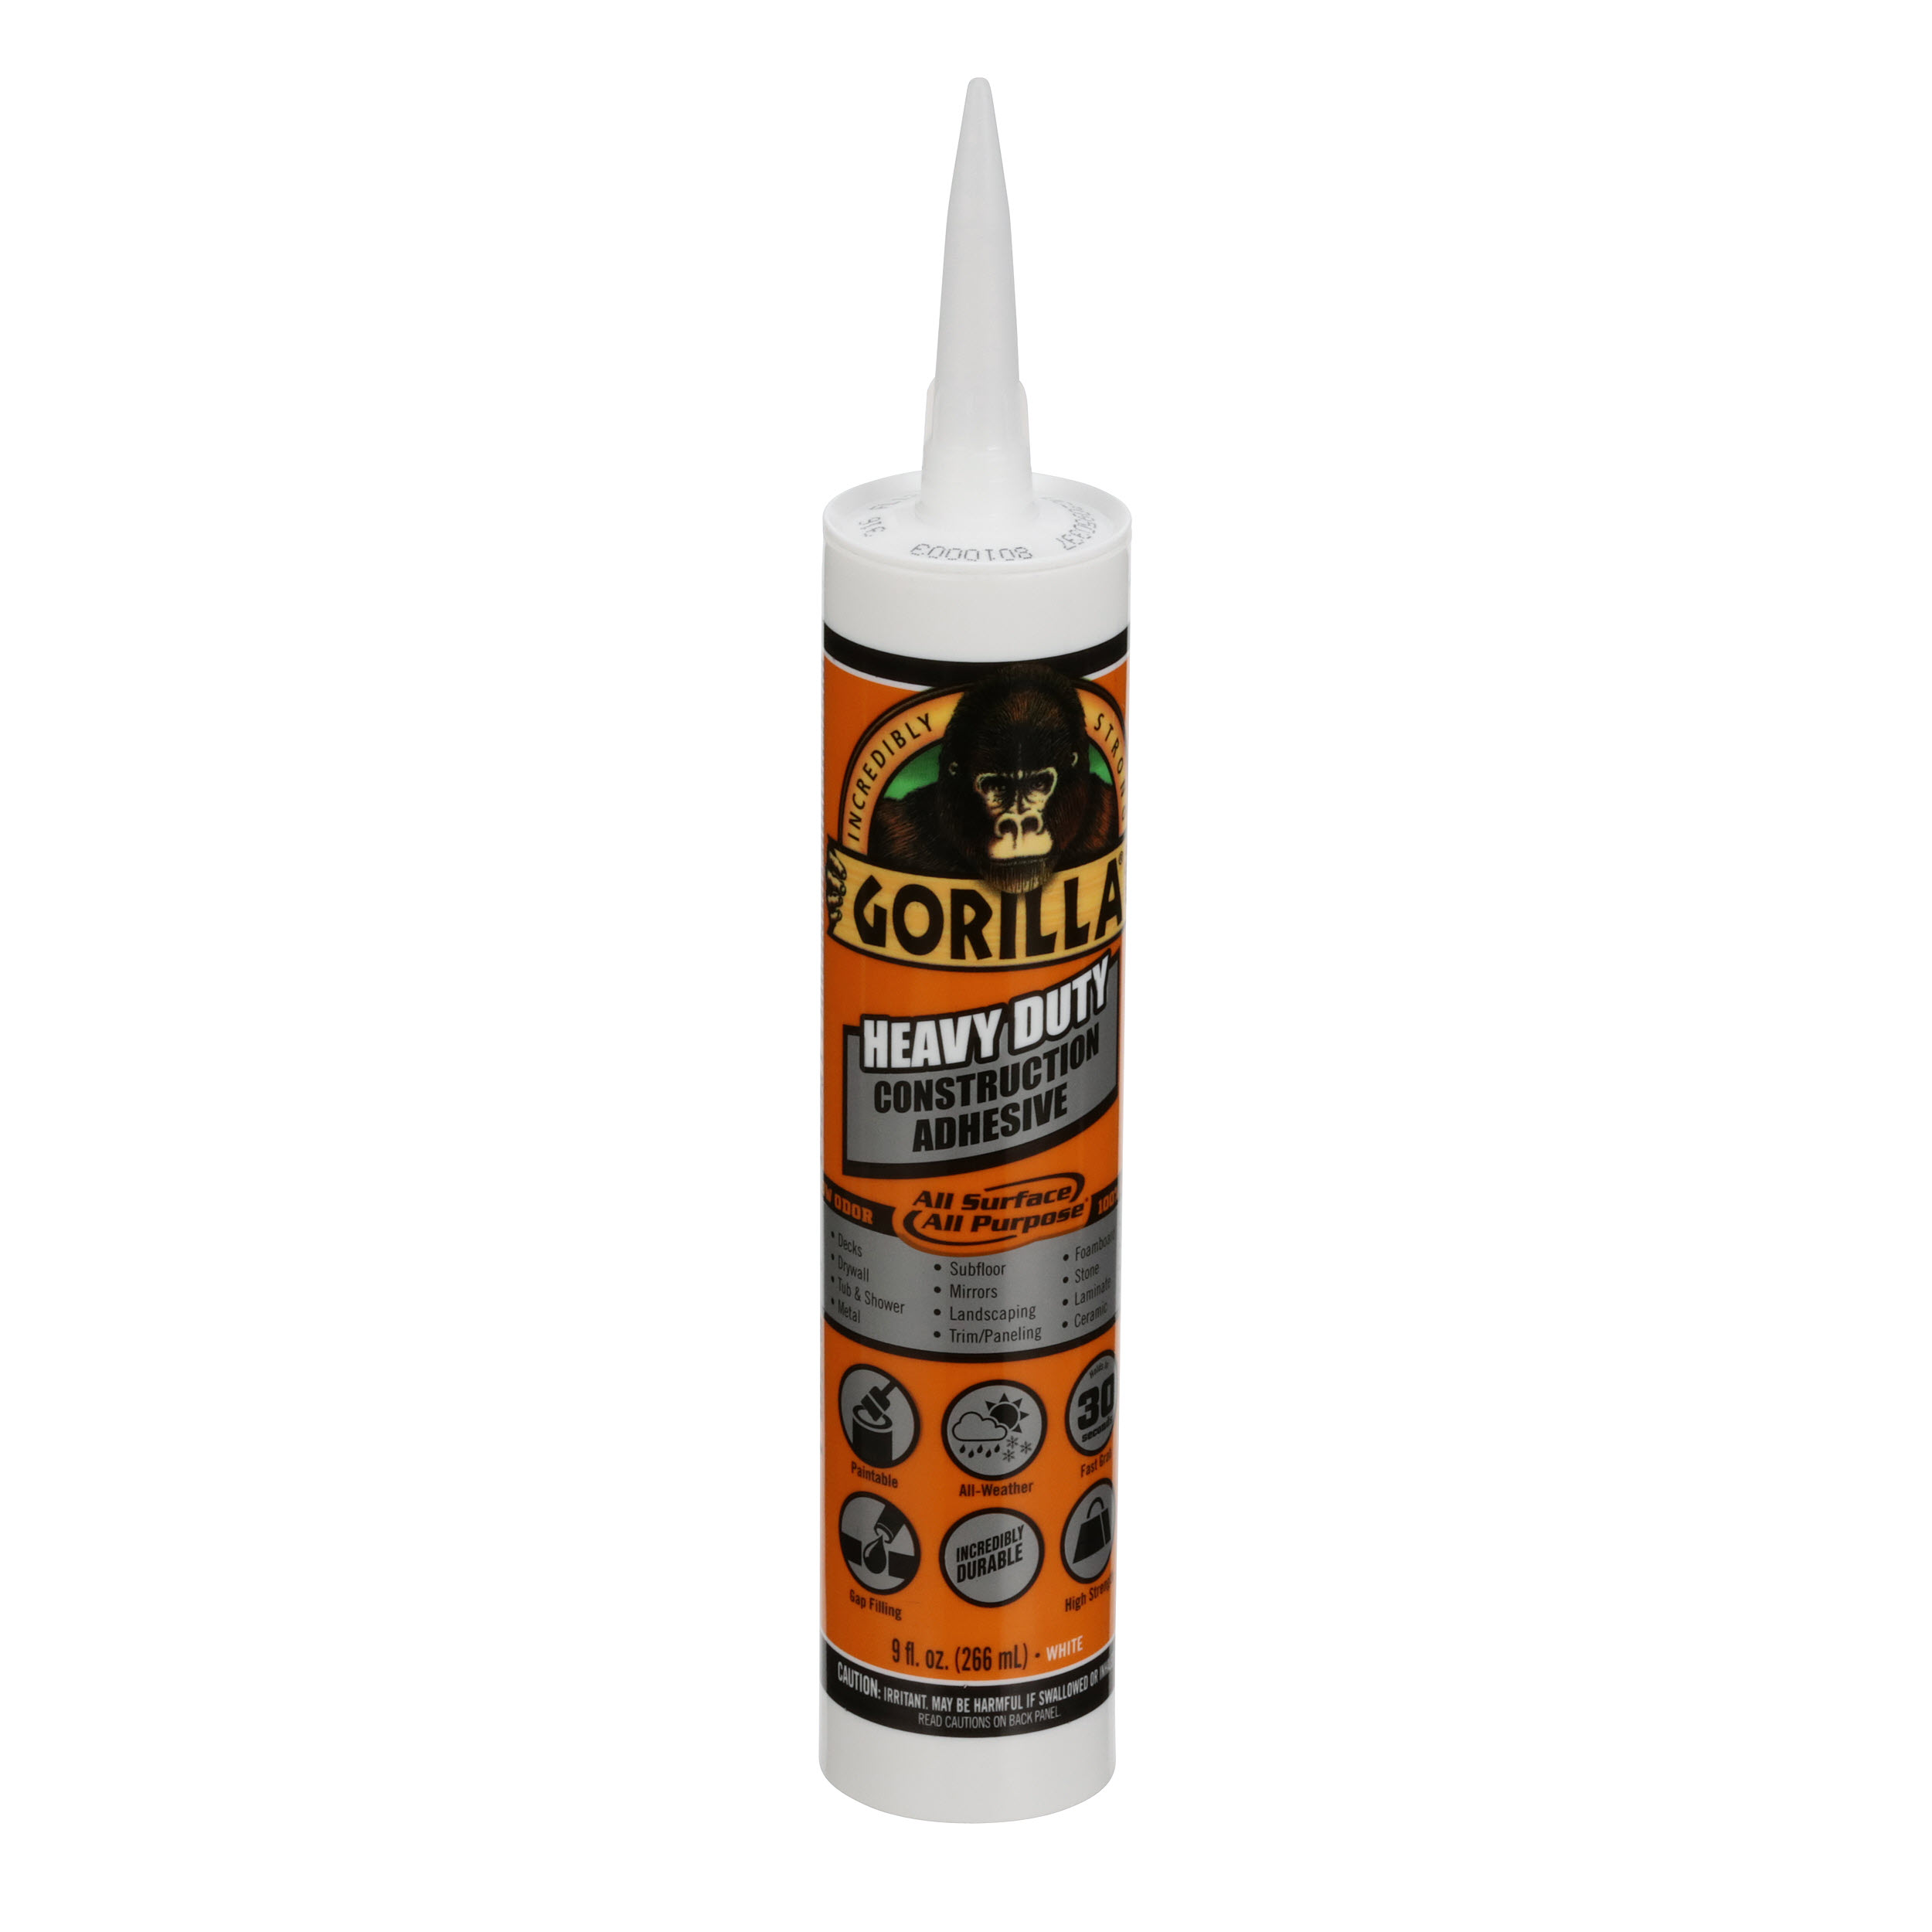 Gorilla Heavy Duty Construction Adhesive, 9 oz. Cartridge